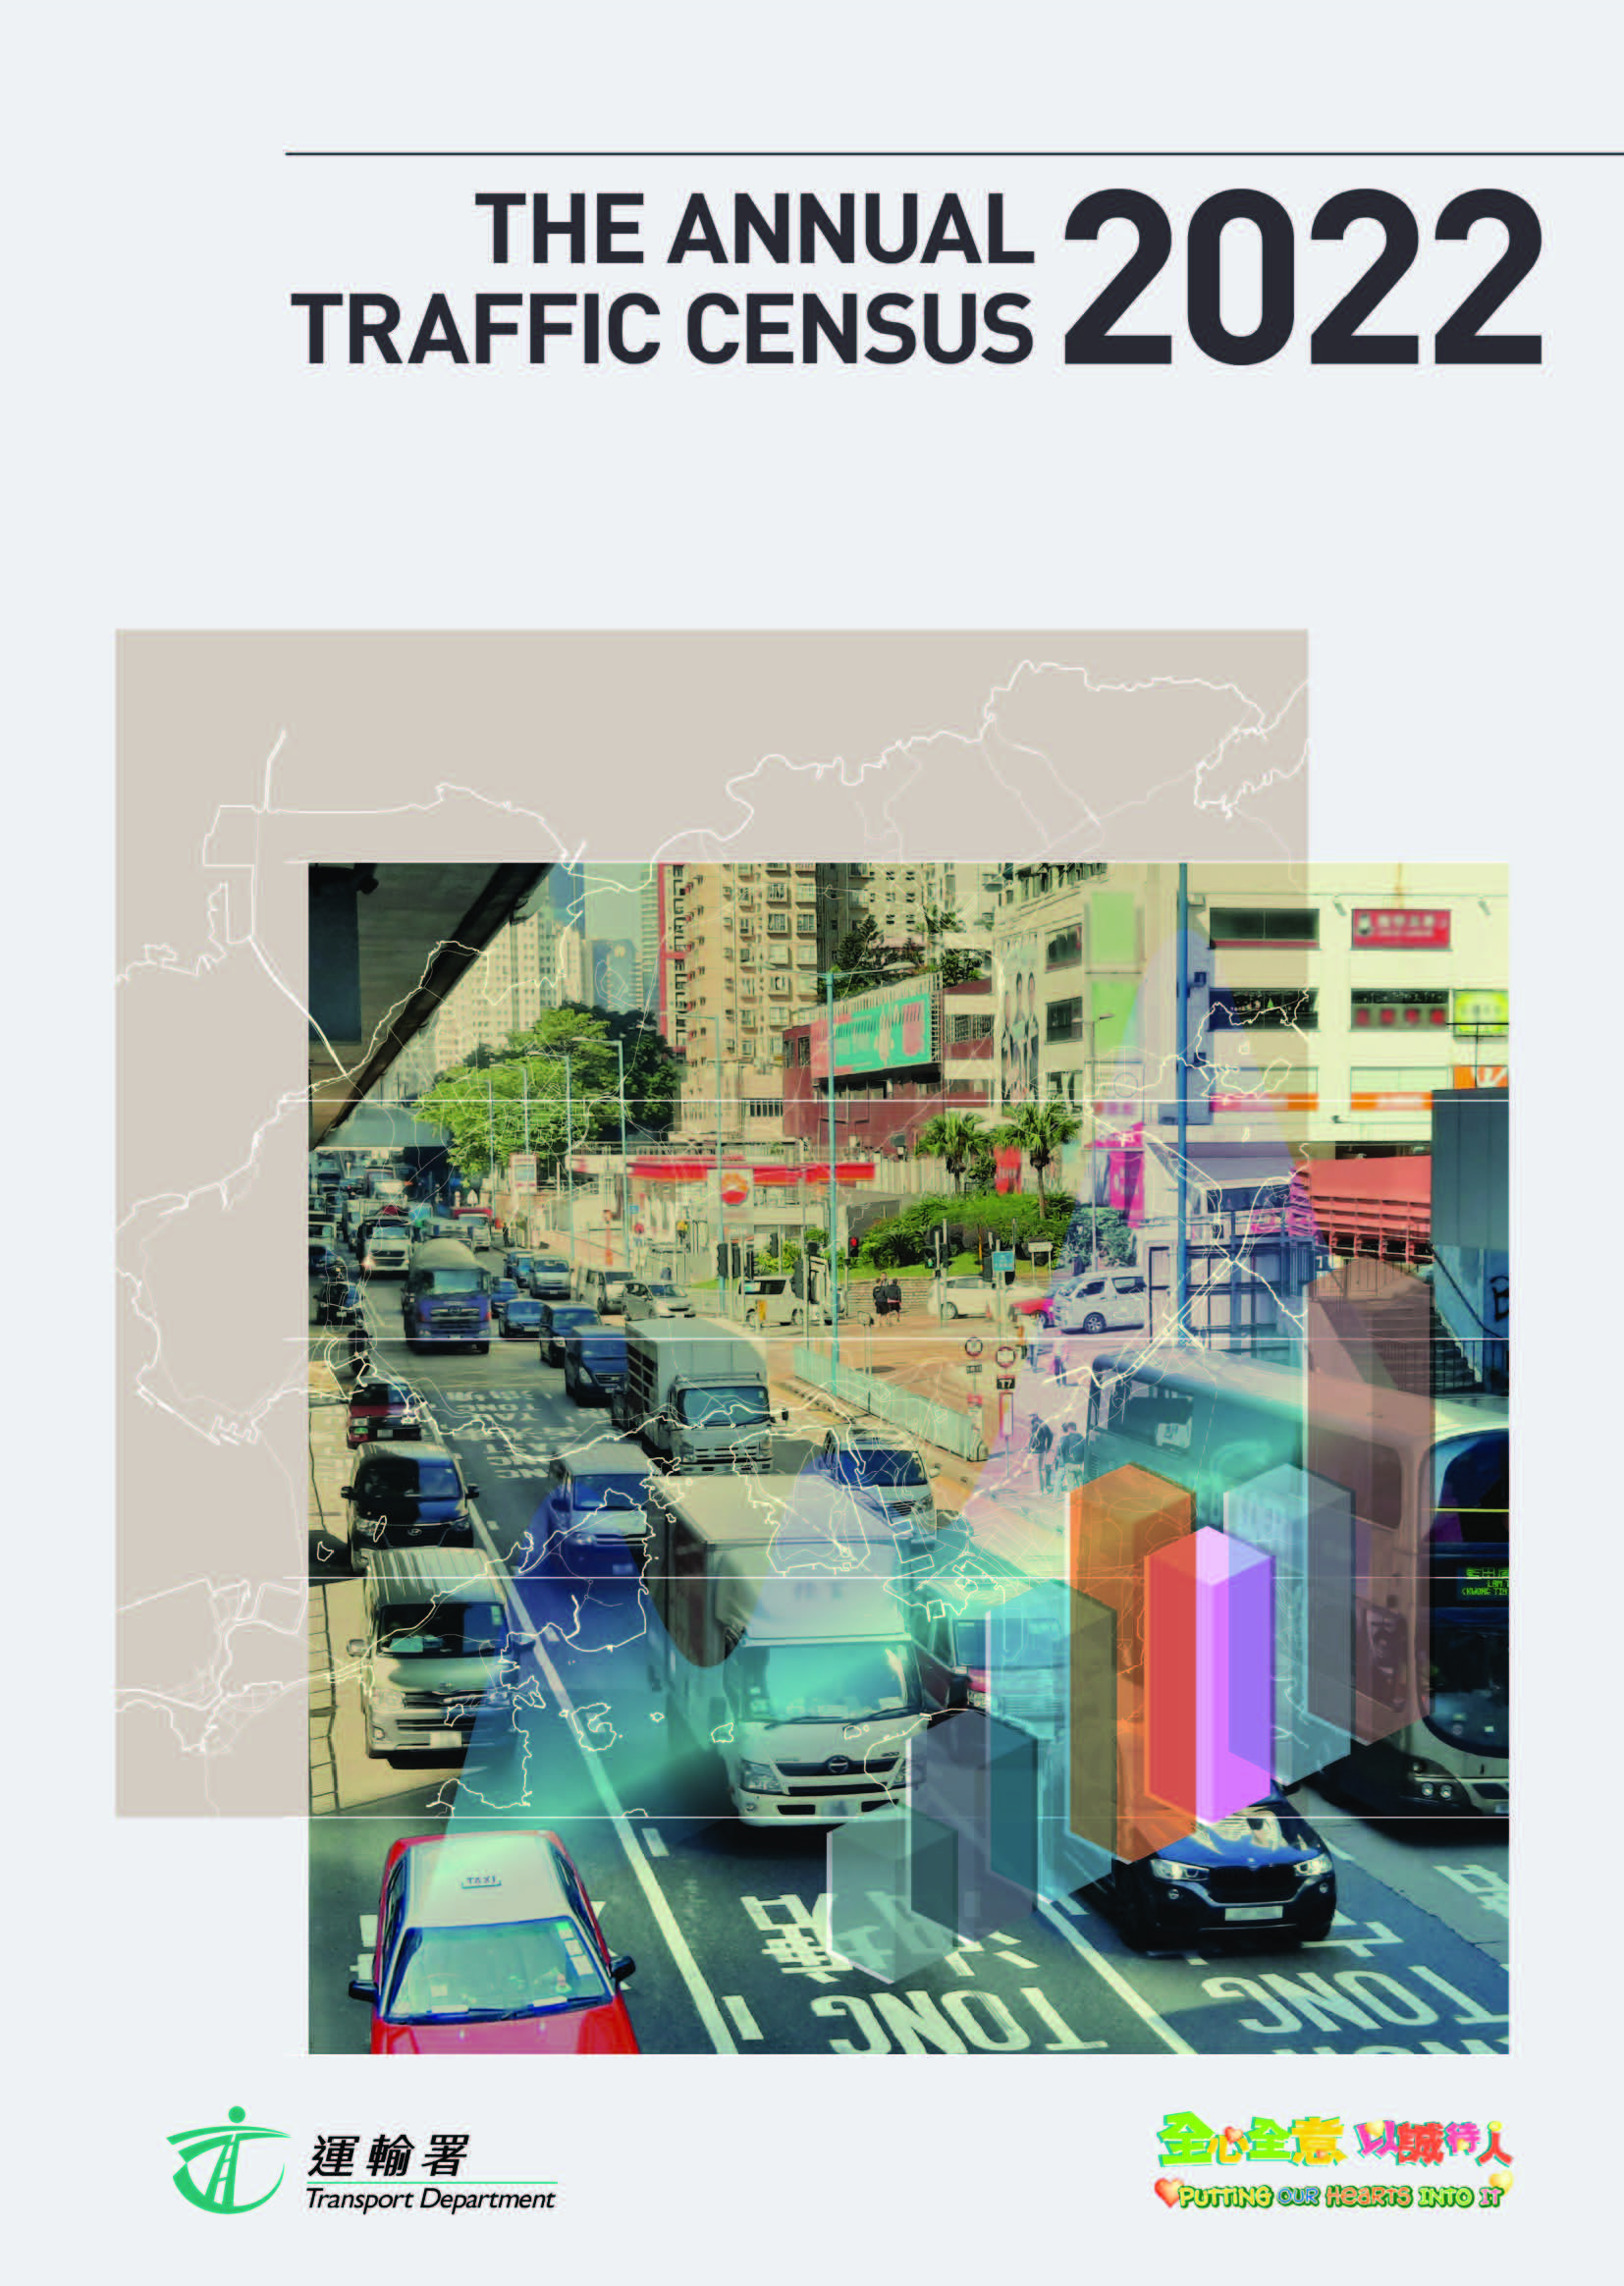 The Annual Traffic Census 2022